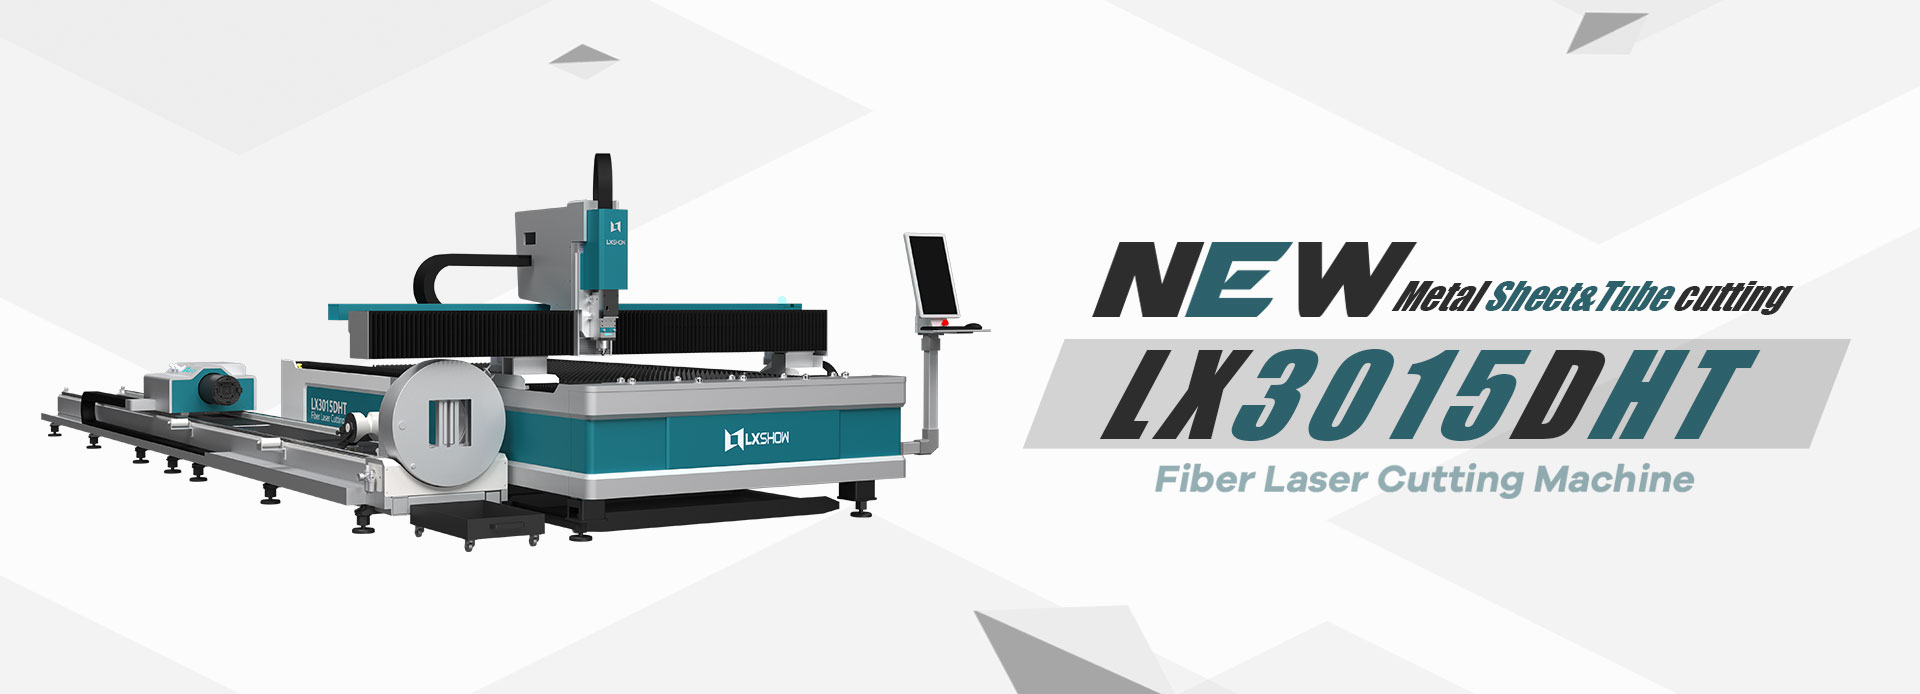 New Fiber Laser Cutting Machine for Stainless Steel 1500W 2000W 3000W 6000W Laser Cutting